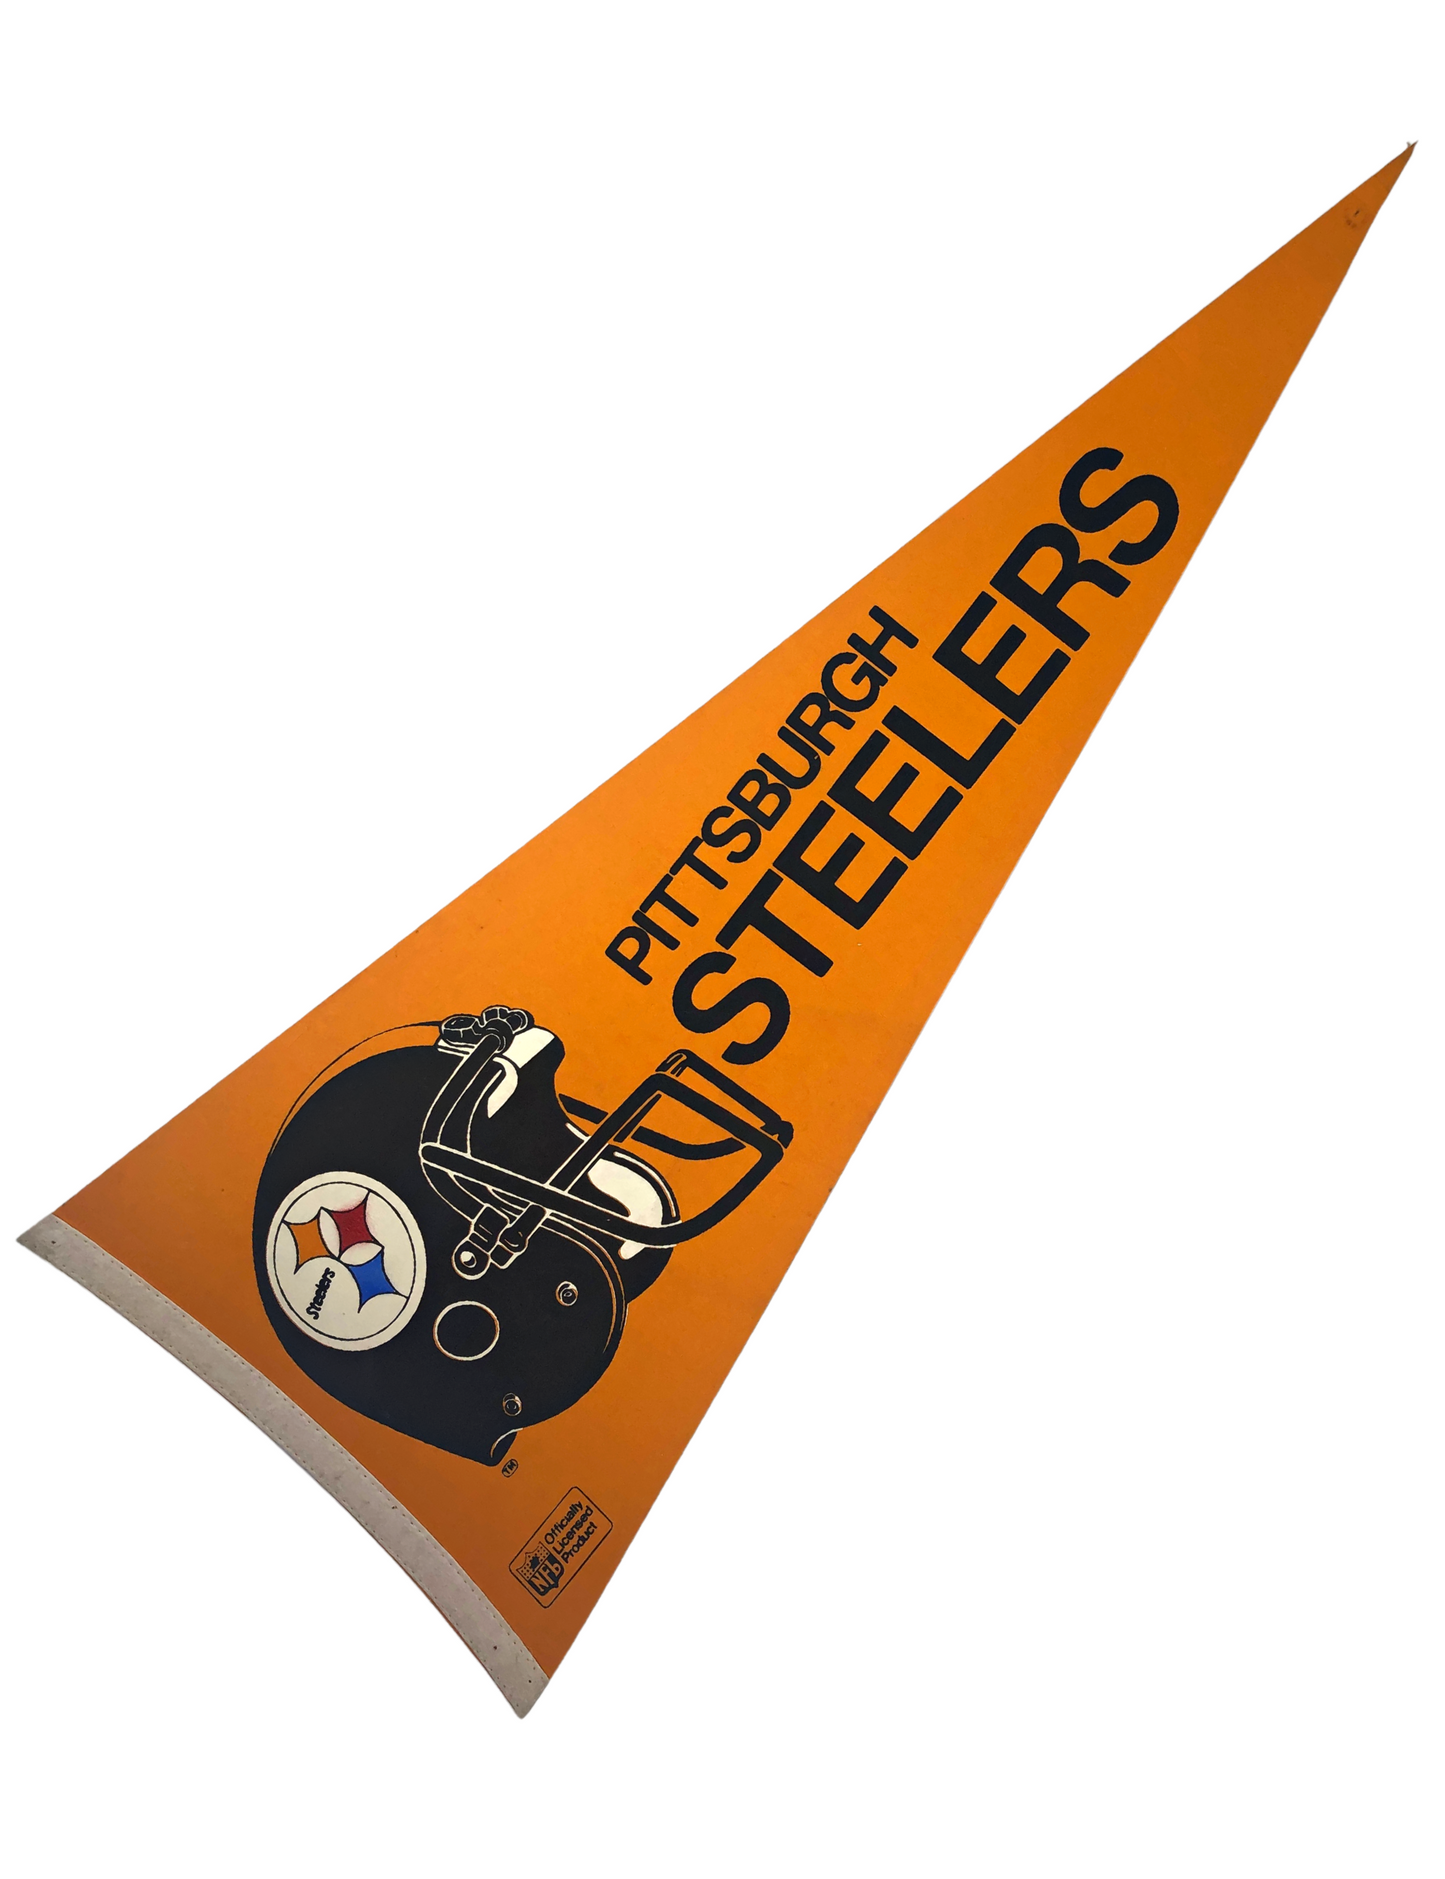 1970’s Pittsburg Steelers Football Felt Pennant 30” x 12”